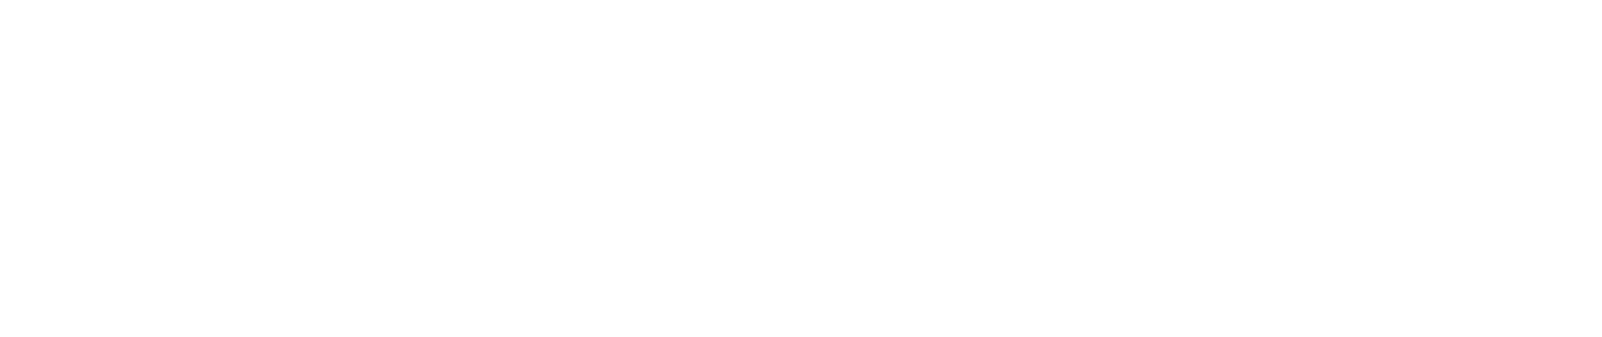 Rosedale Invitational logo variant.